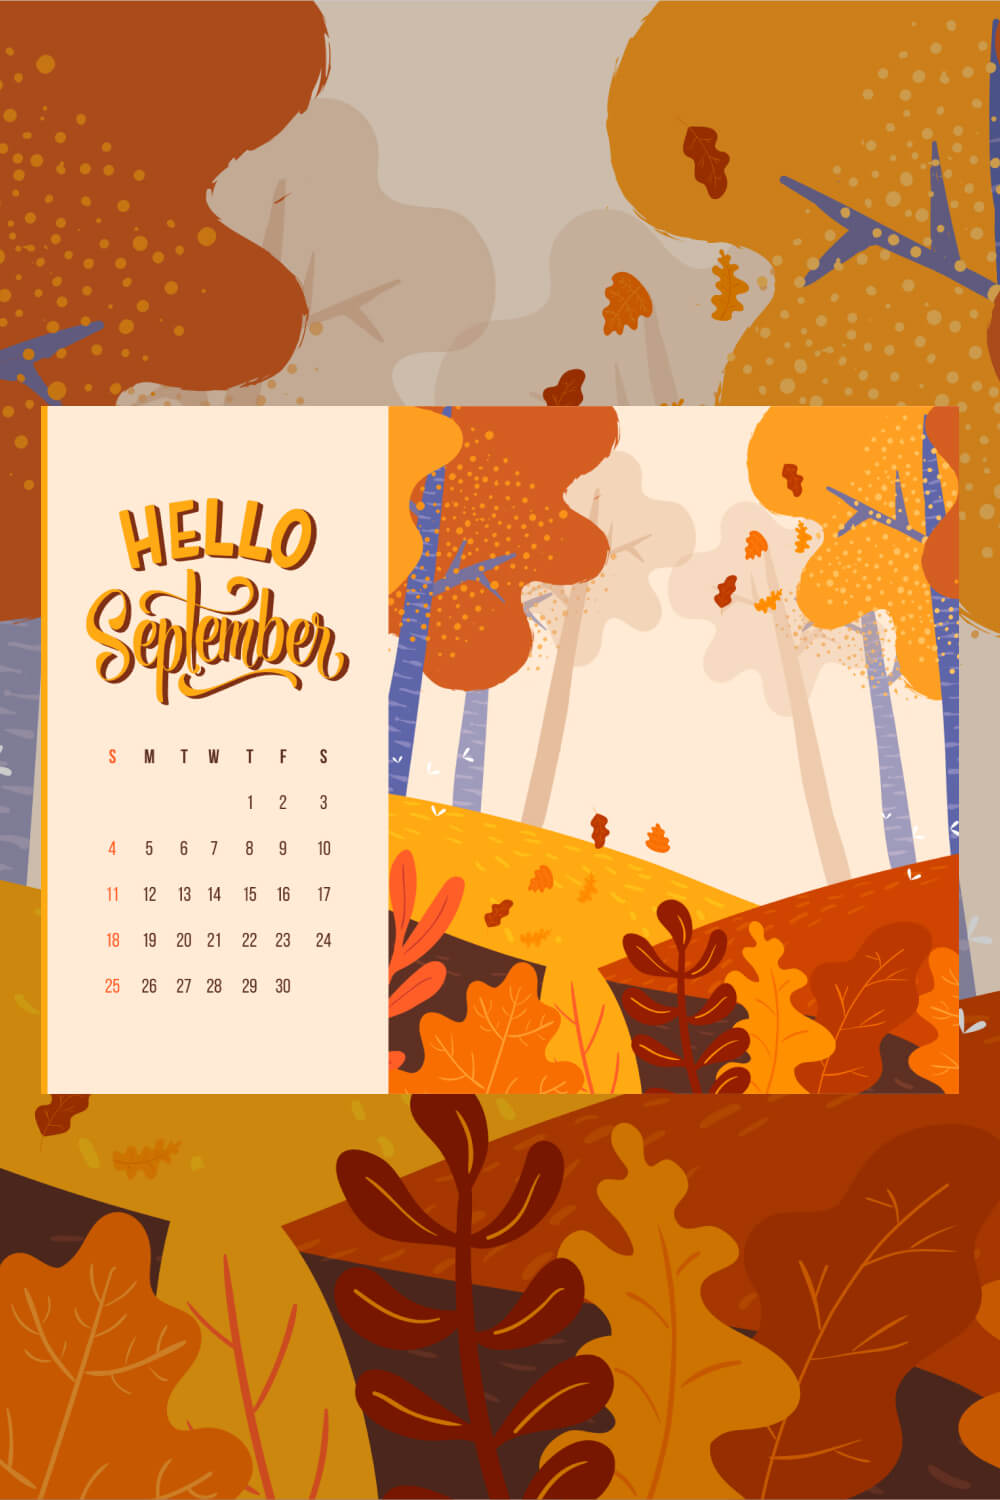 Free Editable September Trees Calendar Printable Pinterest Image.